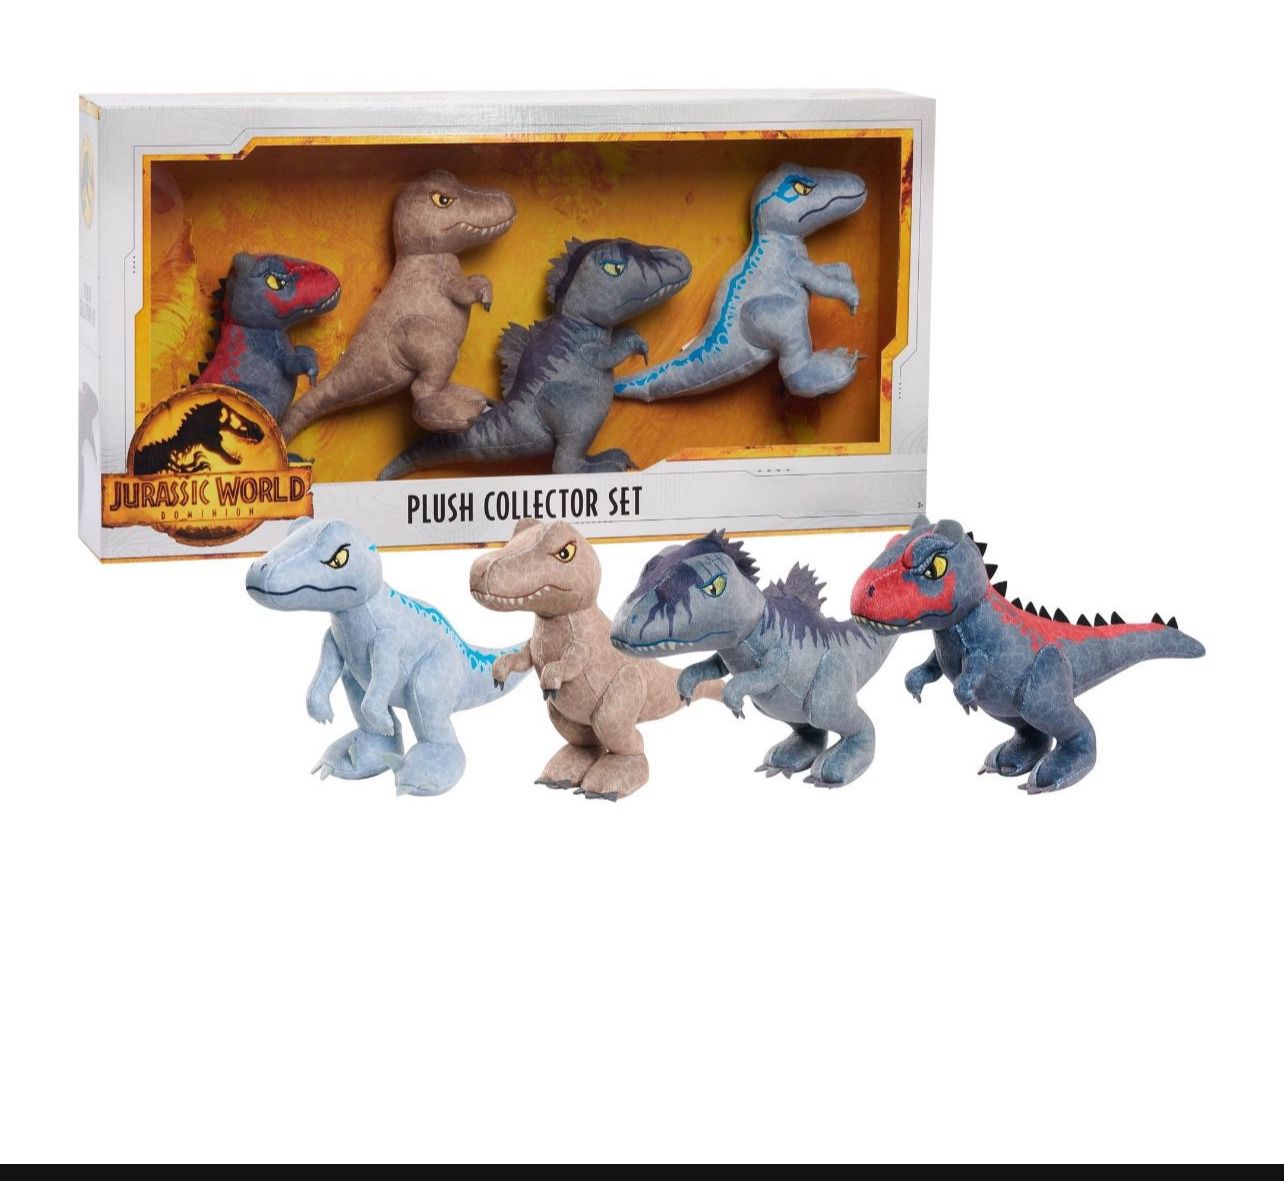 Jurassic World Plush Stuffed Animals Dinosaur Collector Set, Walmart Exclusive